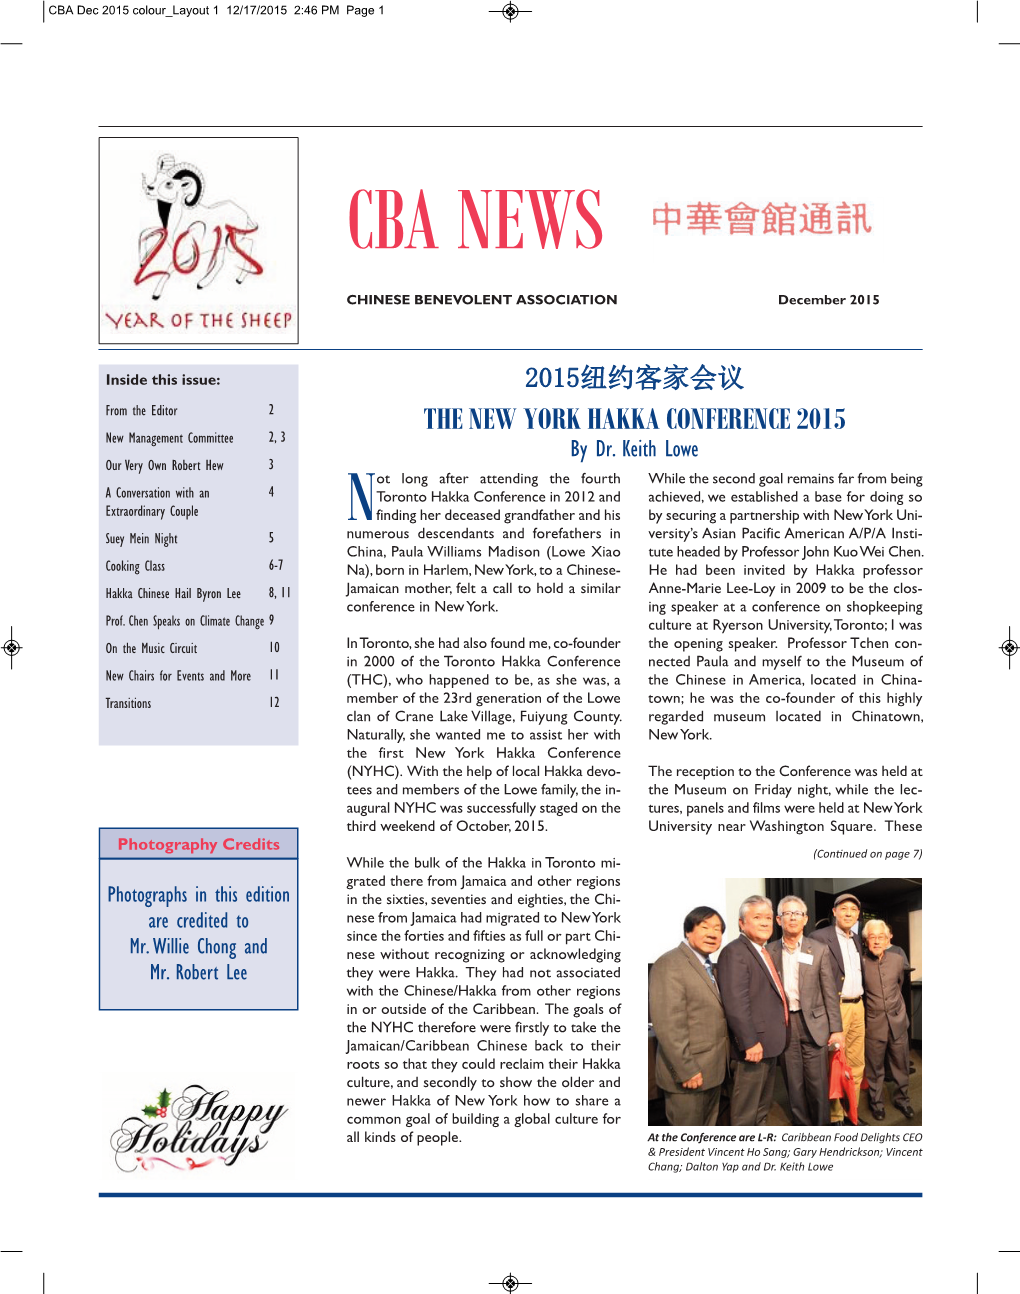 CBA NEWS CHINESE BENEVOLENT ASSOCIATION December 2015